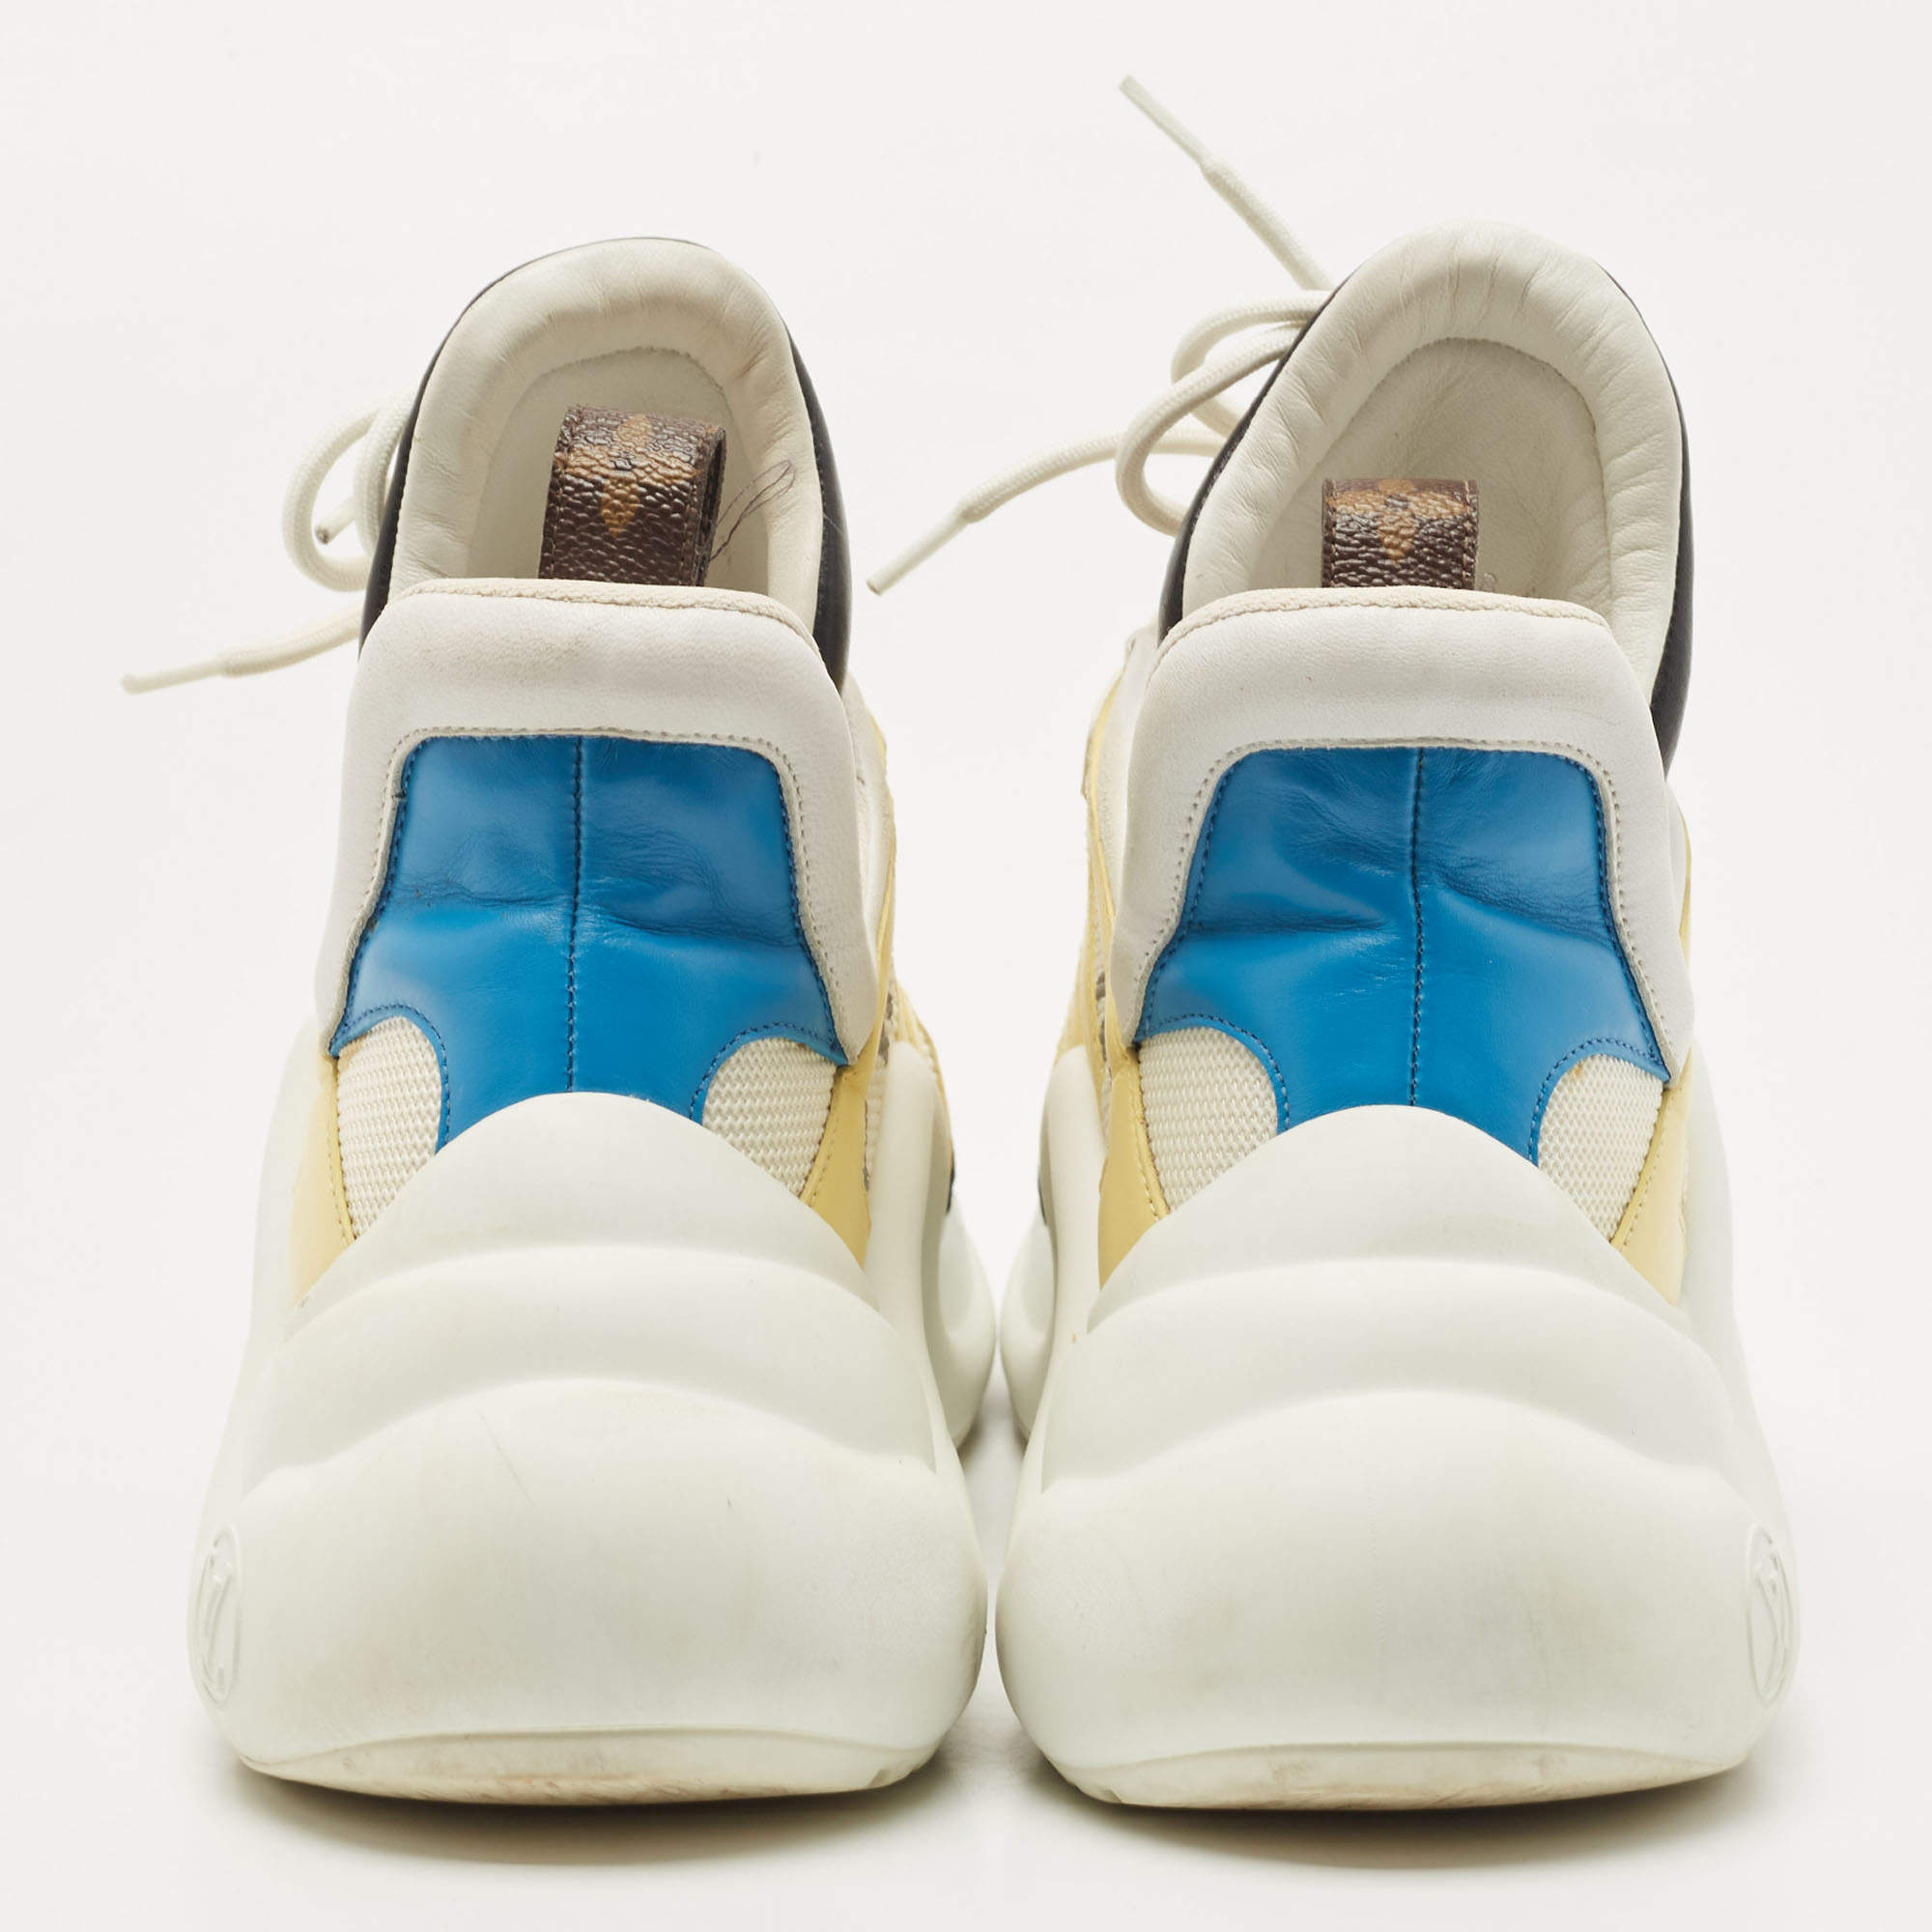 Louis Vuitton GO 0118 Archlight Multicolor Sneakers Size 44